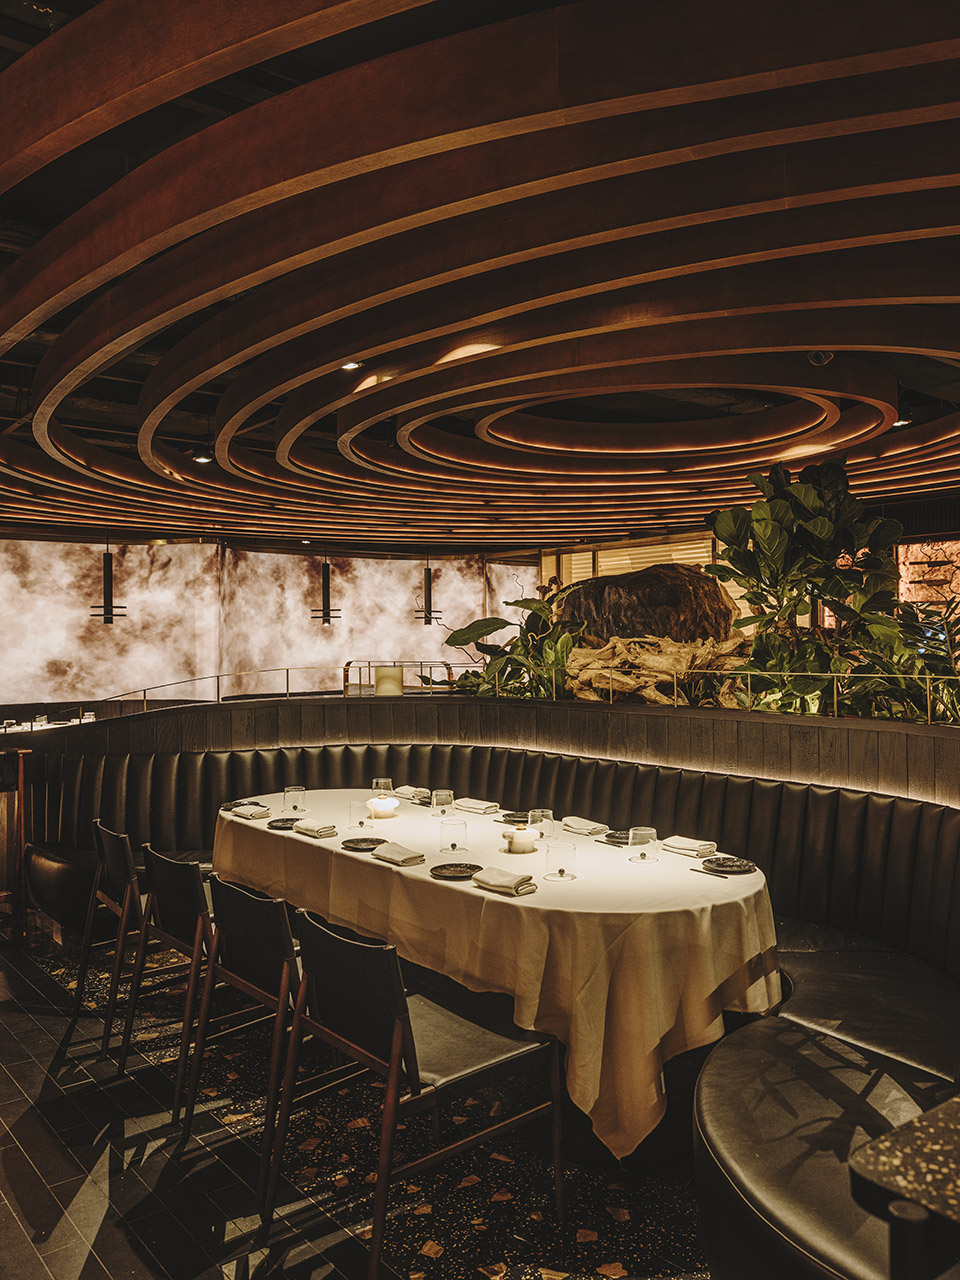 Leña餐厅，西班牙/木头、石头和炭火，提取最原始的烹饪精髓-71